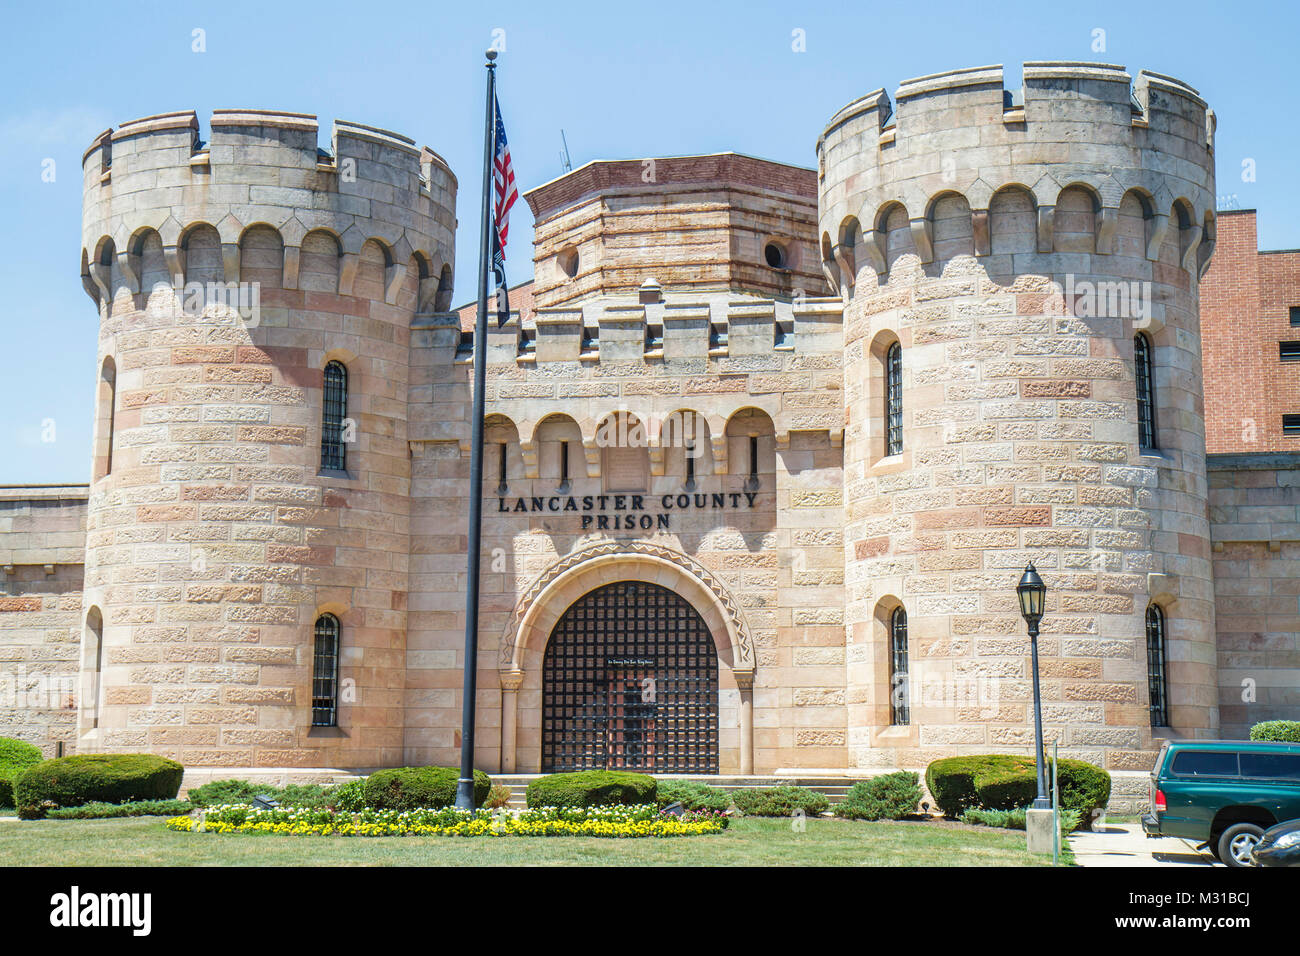 Pennsylvania,PA,Northeastern,Lancaster,Lancaster County Prison,edificio de estilo medieval,arquitectura inusual,castillo,réplica,encarcelado,castigo,peni Foto de stock